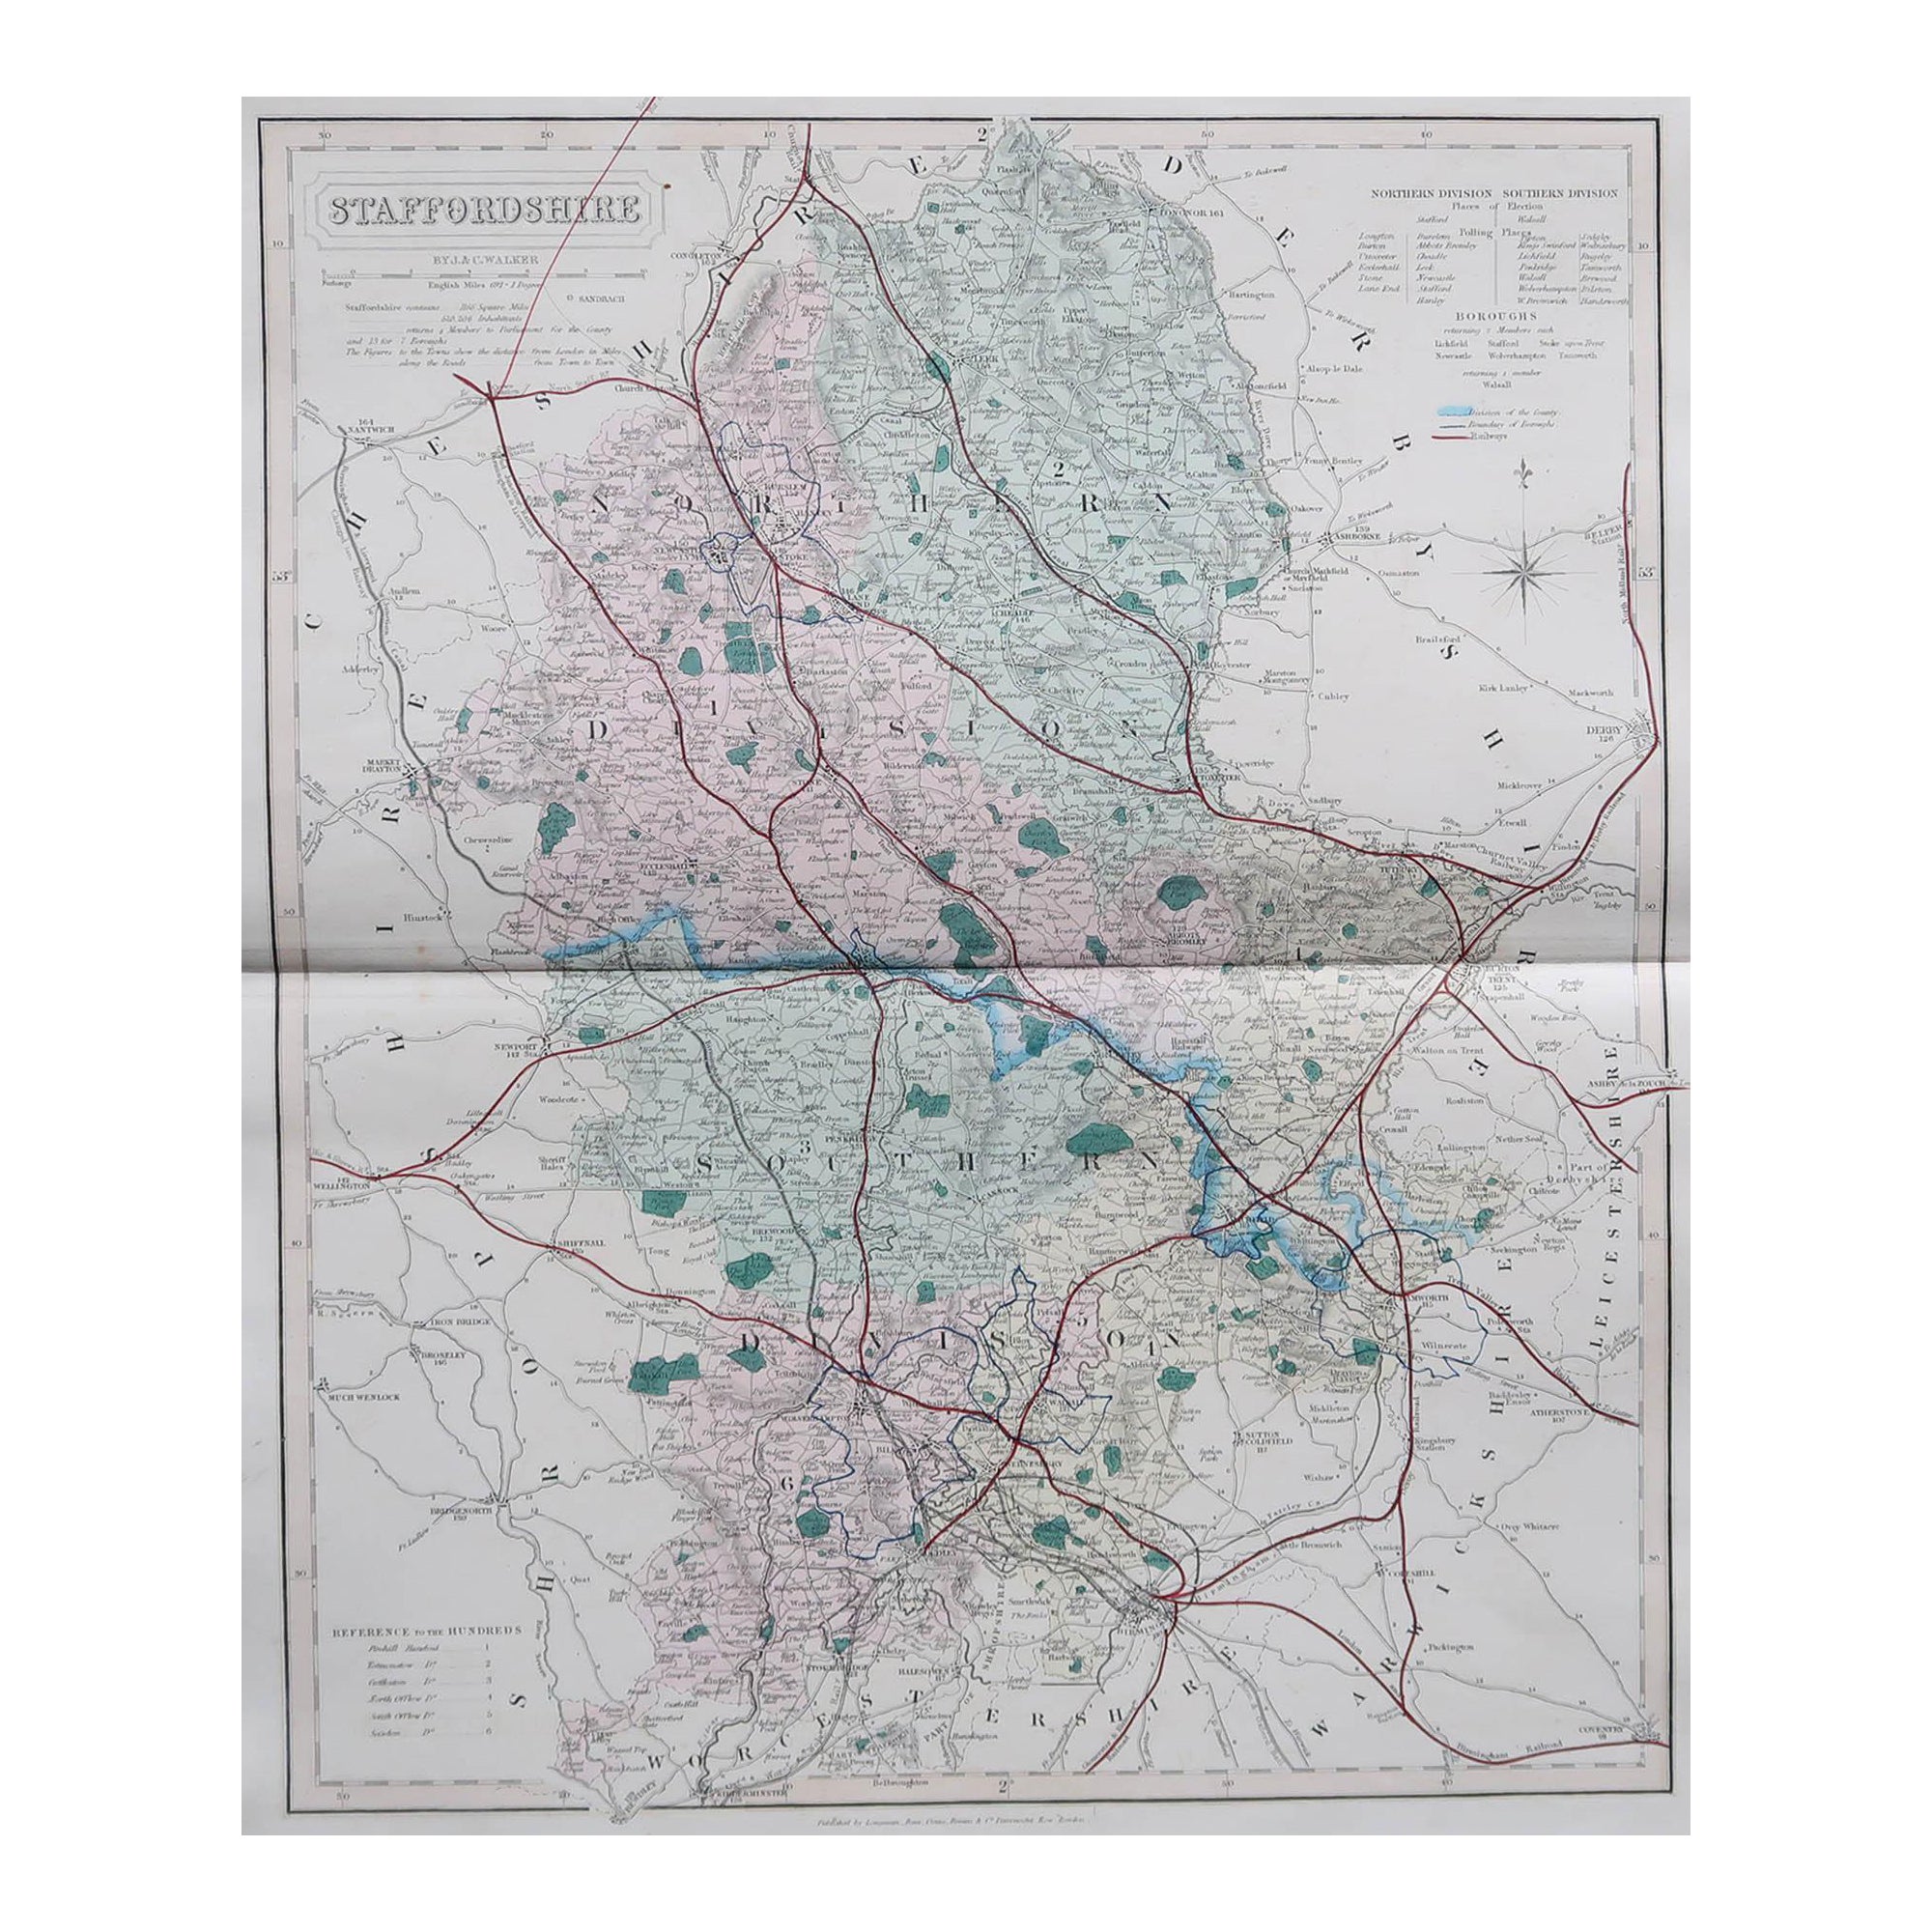 Original Antique English County Map, Staffordshire, J & C Walker, 1851